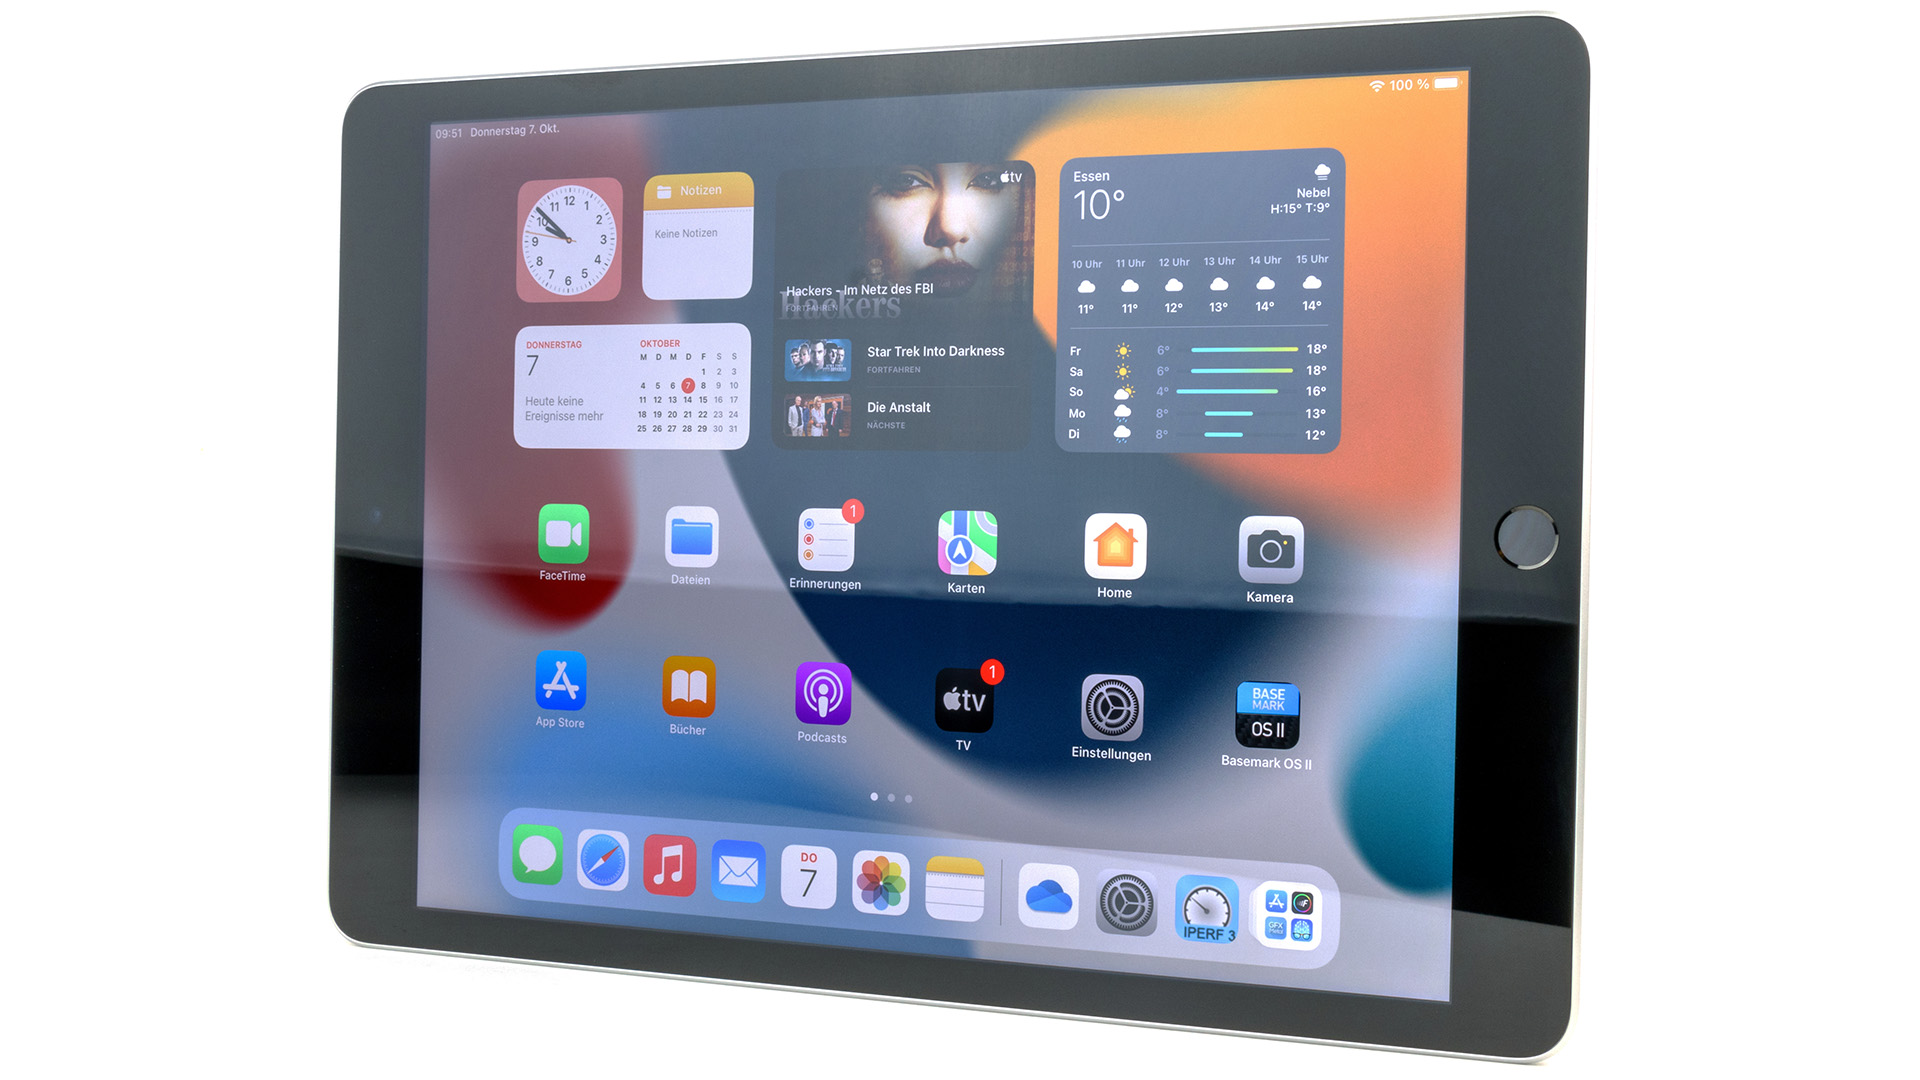 Verhogen mannetje hefboom 2021 Apple iPad 10.2 (9th Gen) review: Subtle improvements for the most  affordable Apple tablet - NotebookCheck.net Reviews